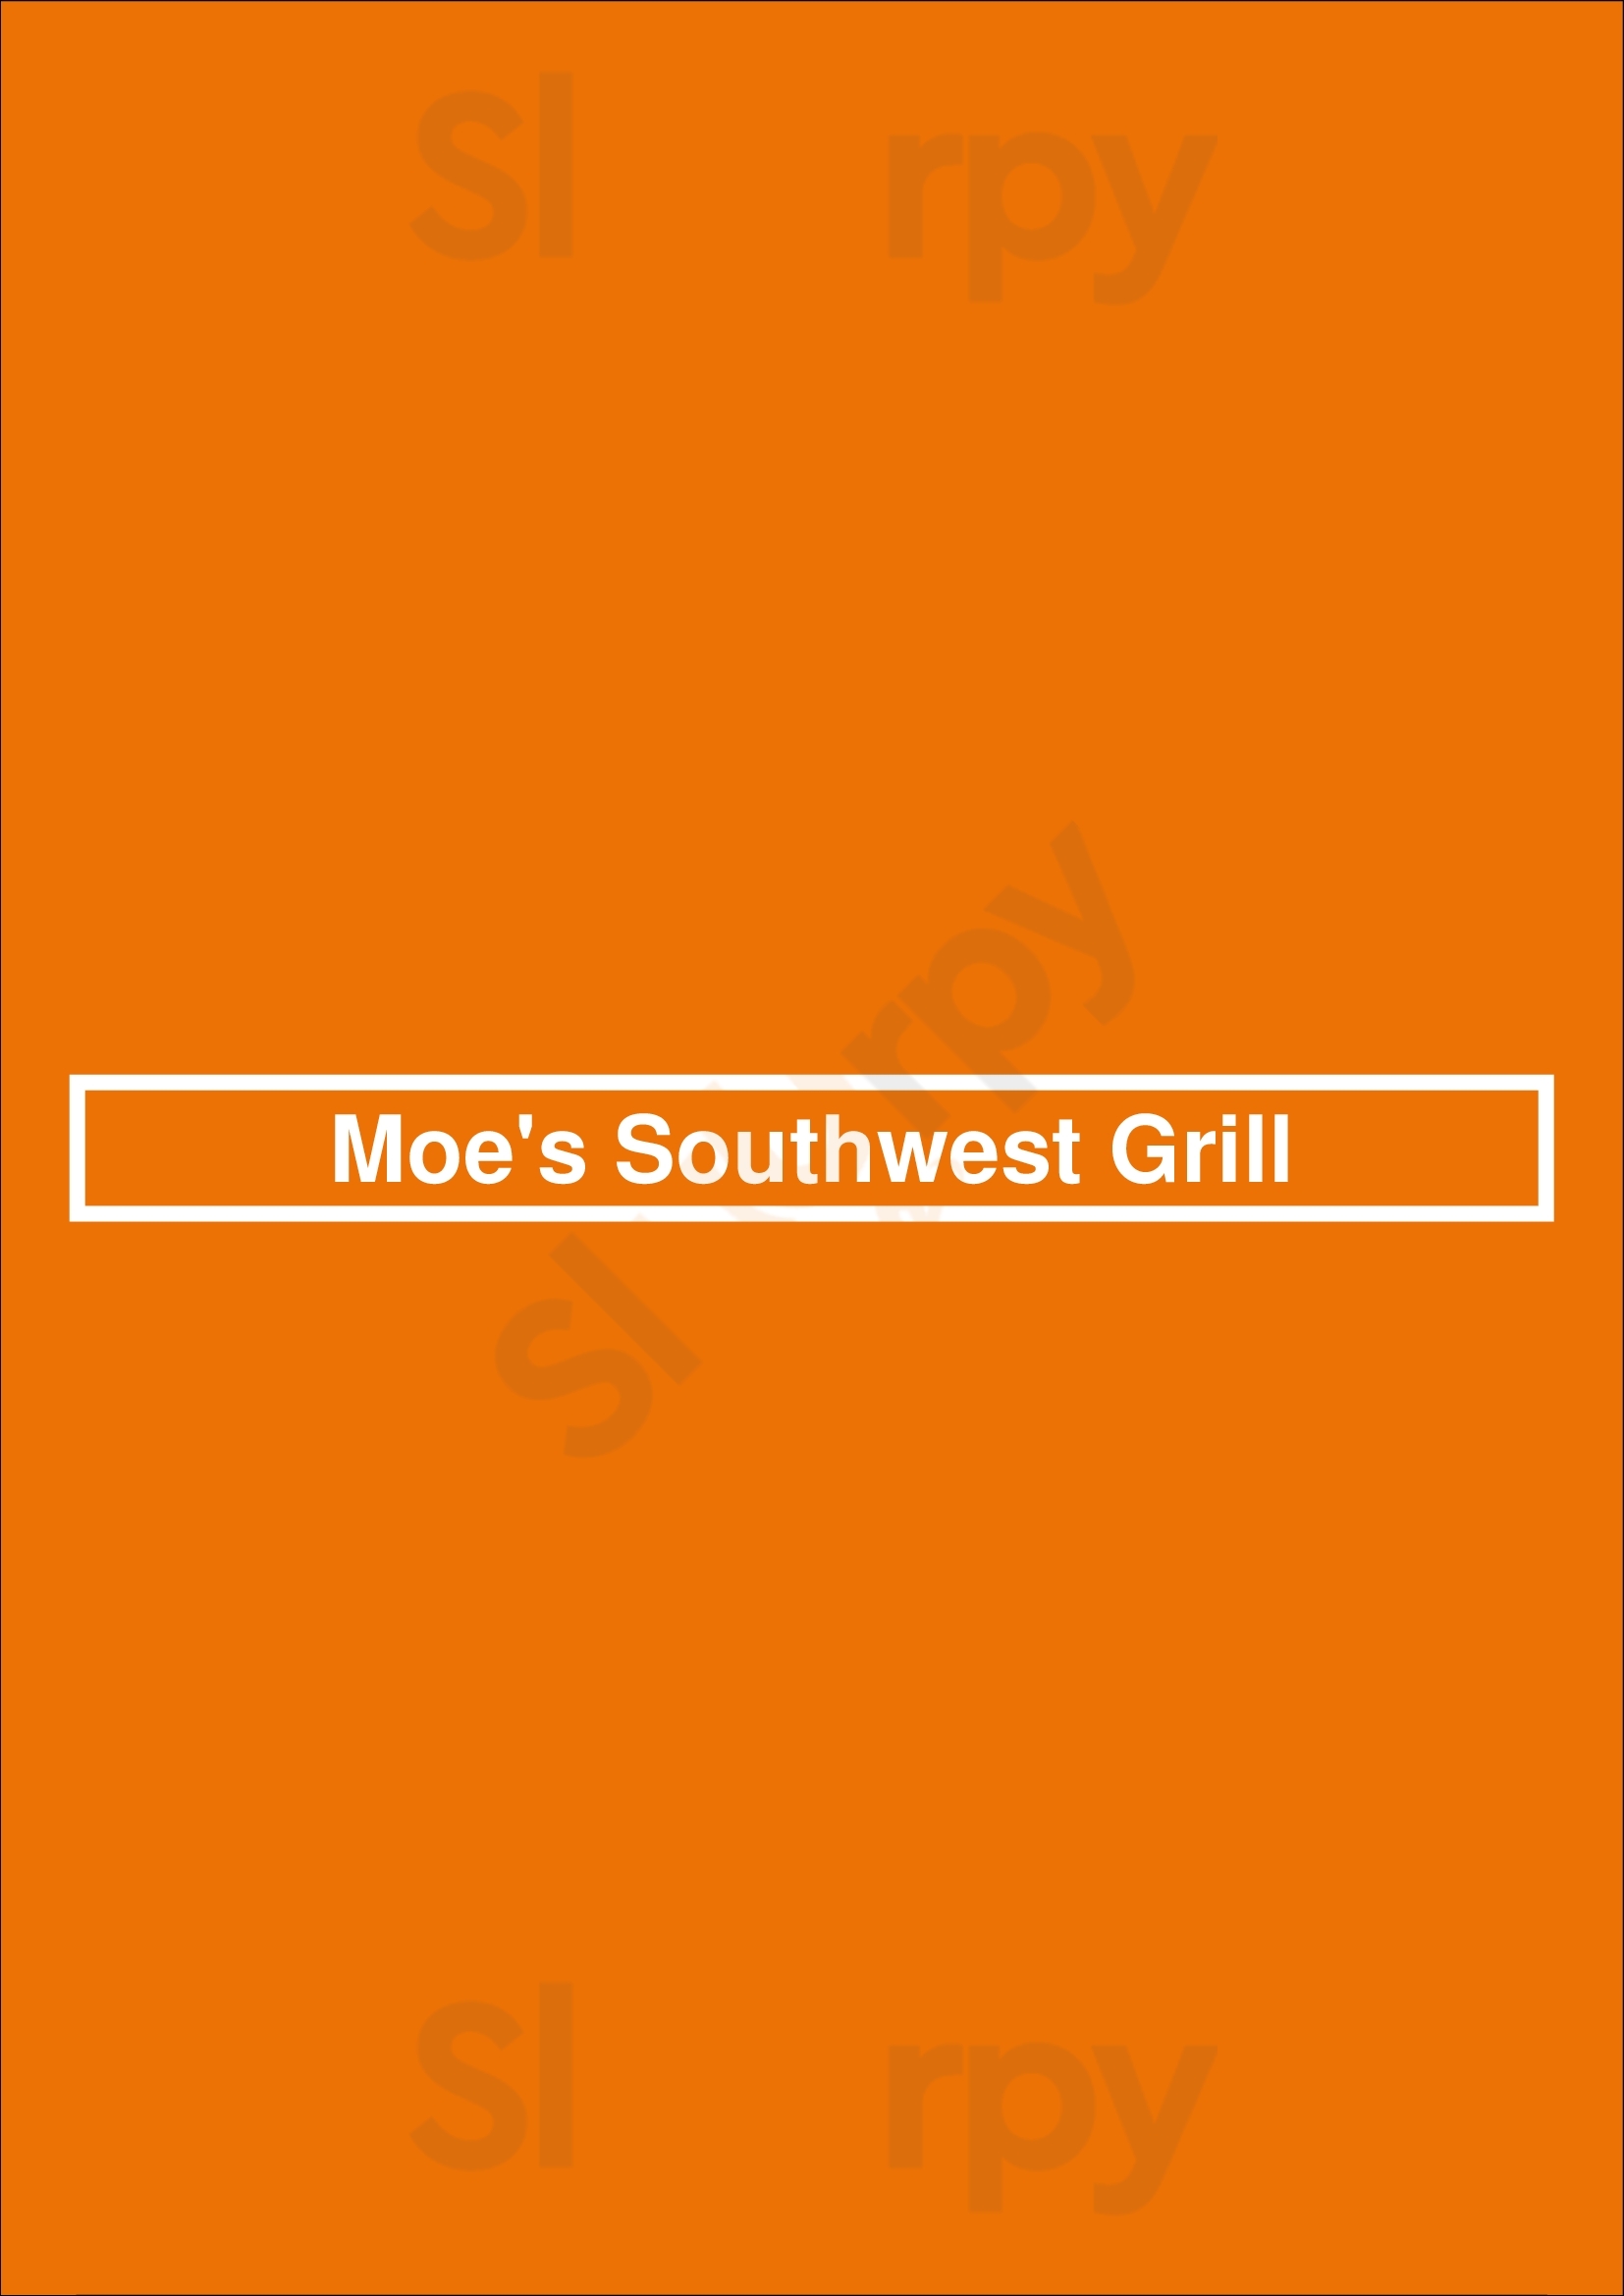 Moe's Southwest Grill Atlanta Menu - 1